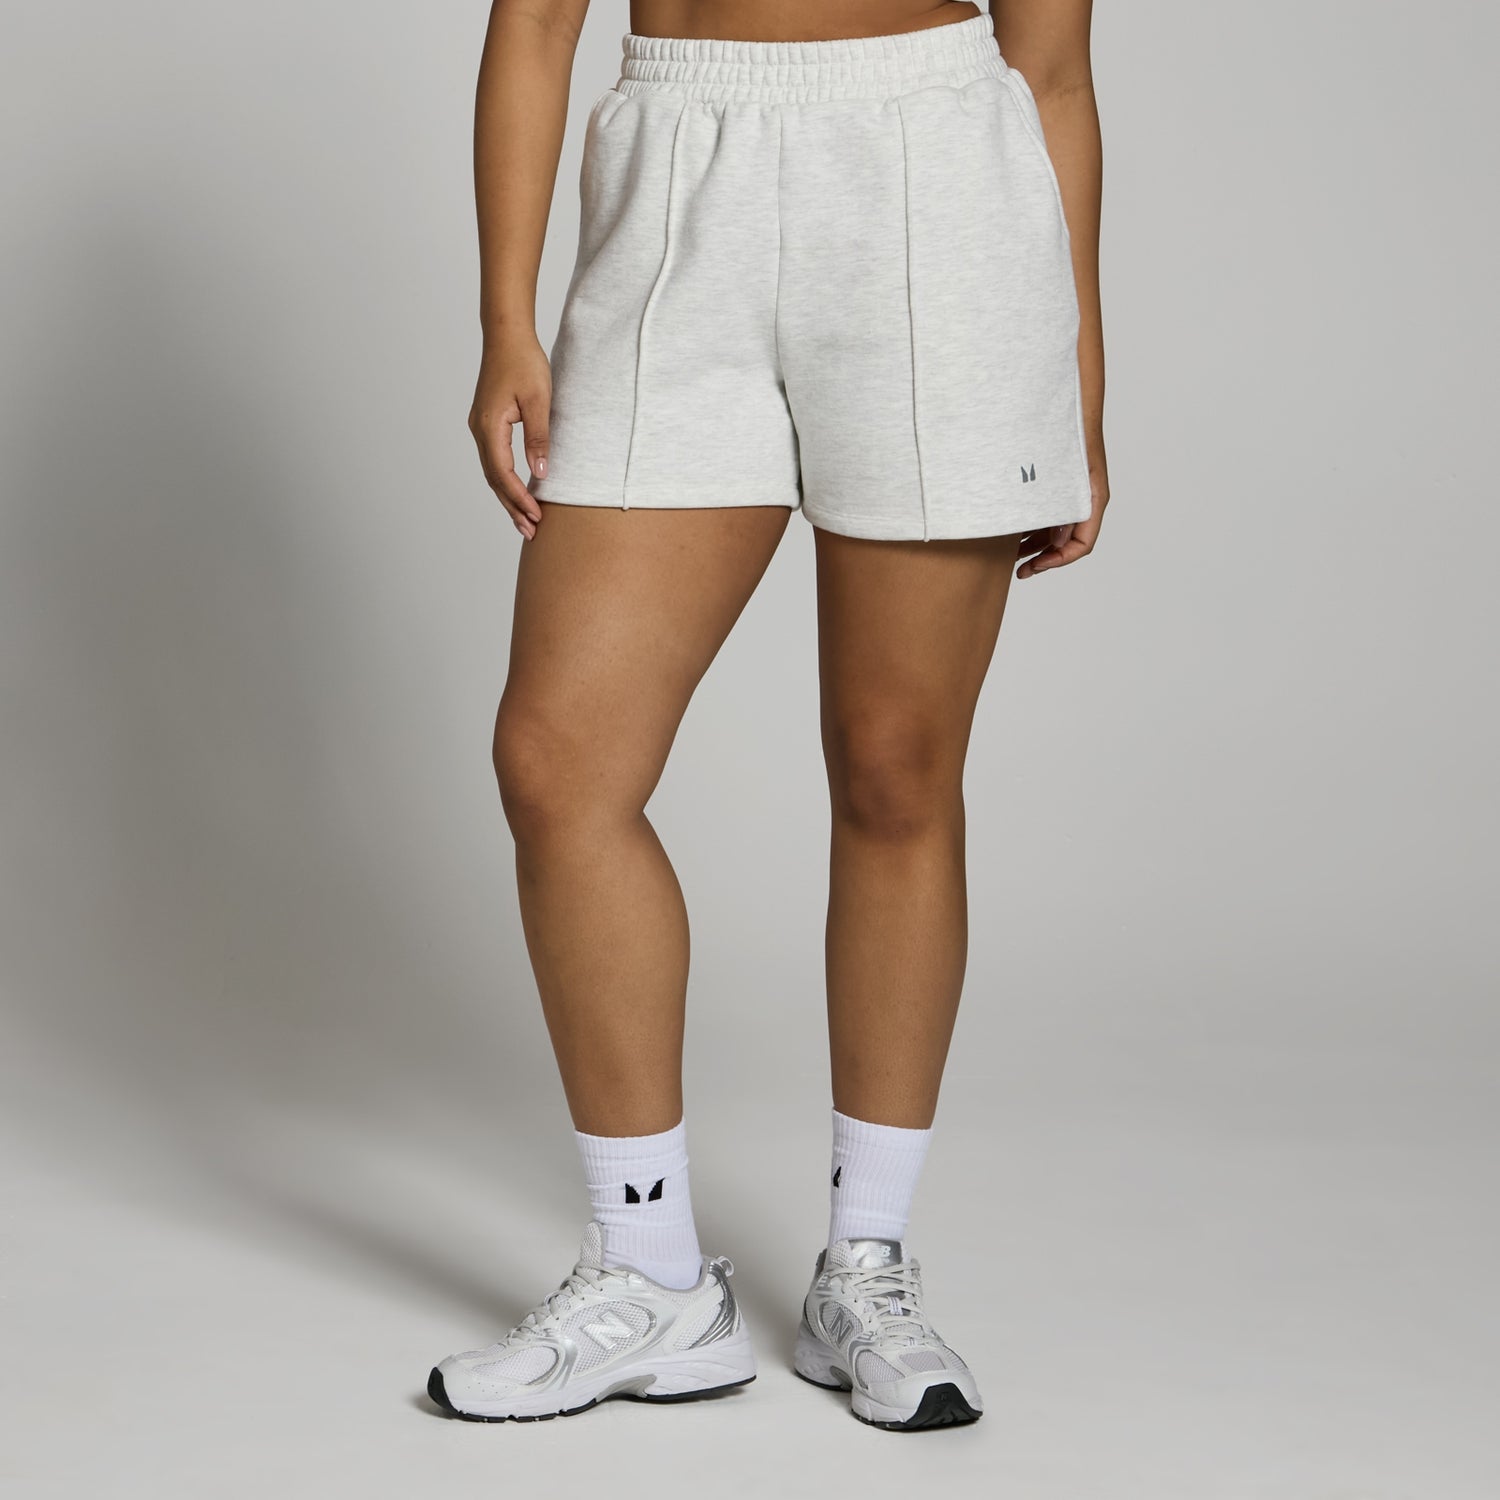 Lifestyle生活方式系列女士短款运动短裤 - 浅灰  - XS